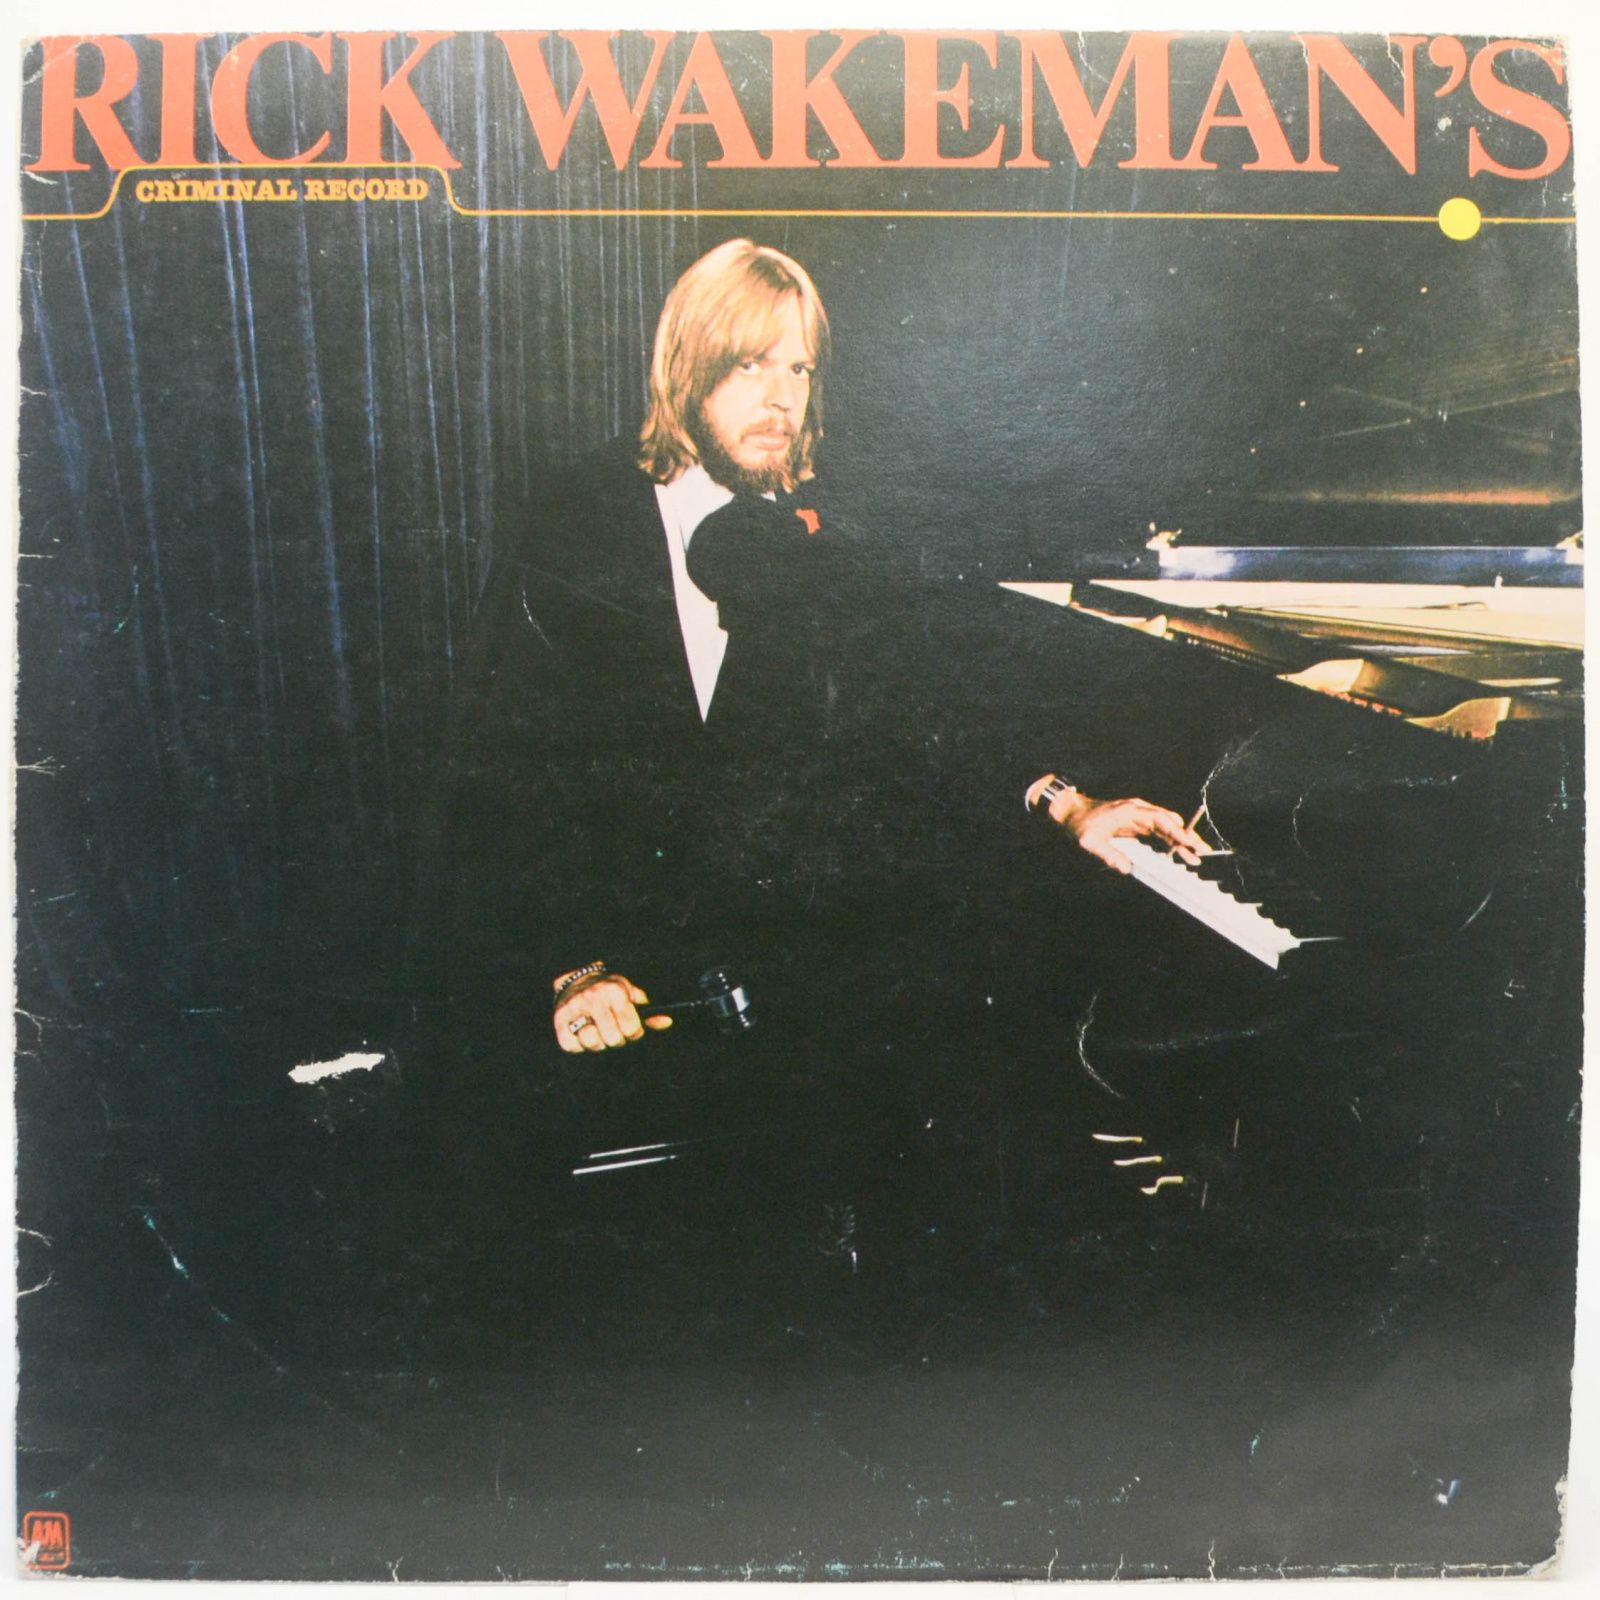 Rick Wakeman — Rick Wakeman's Criminal Record, 1978